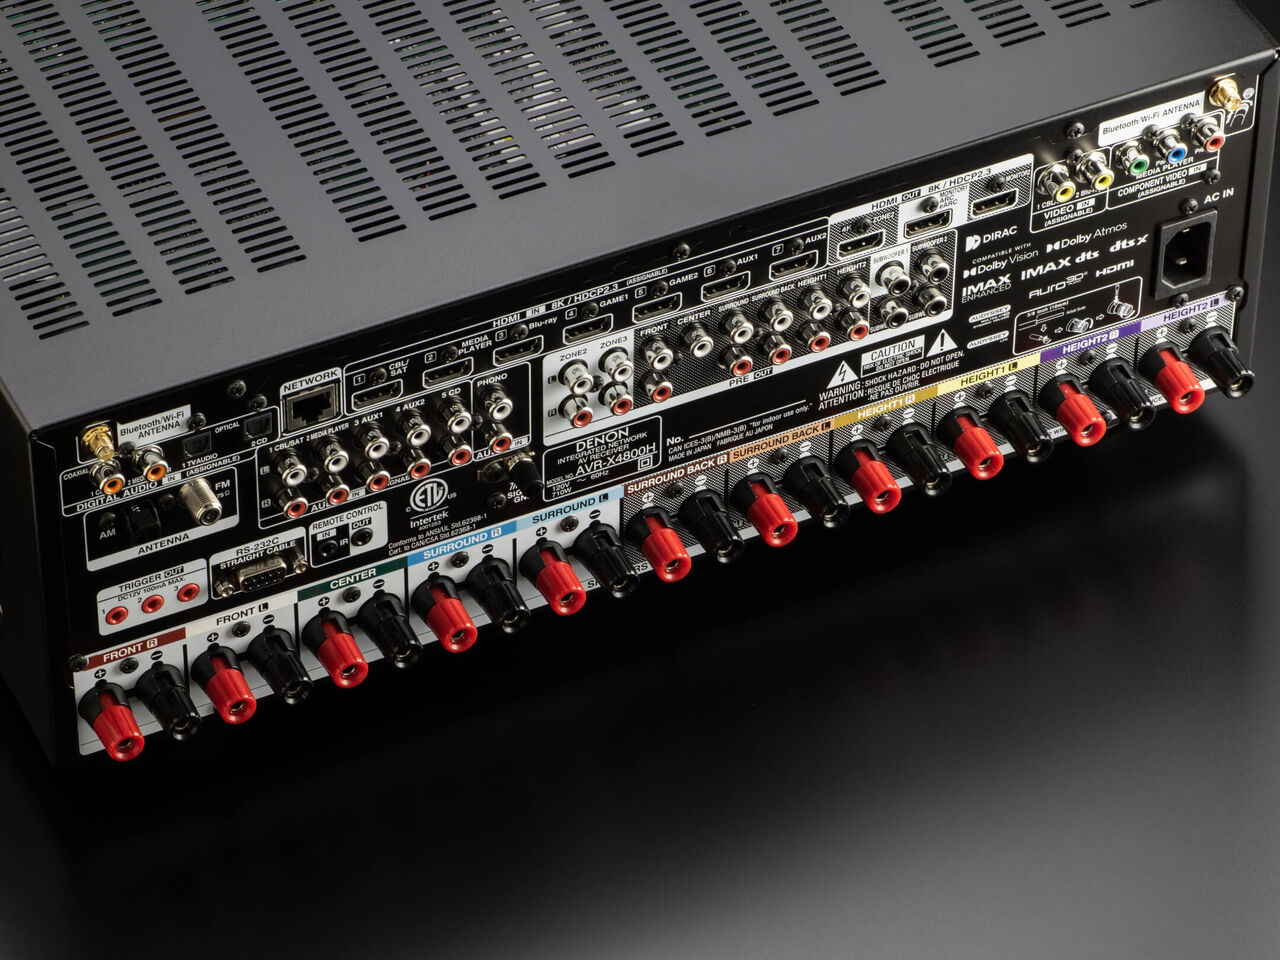 Denon AVR-X4800H 9.4 Ch. 125W 8K AV Receiver with HEOS® Built-in